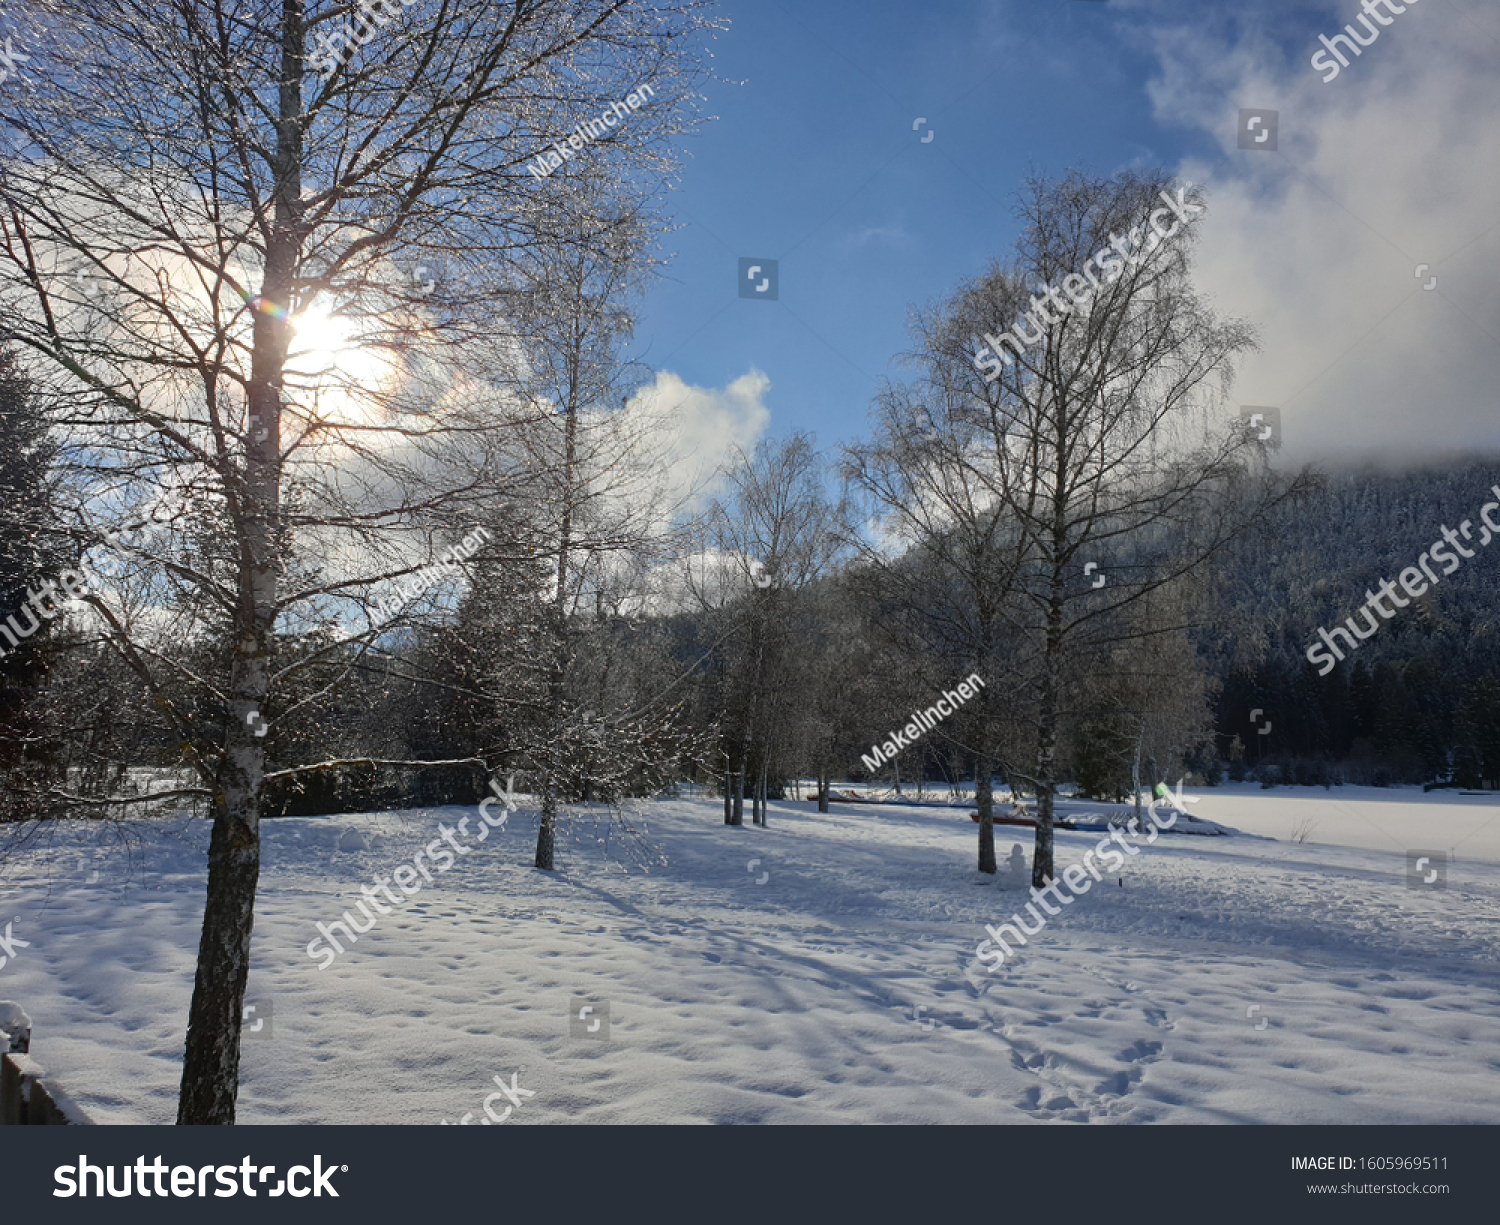 fairytale winter landscape at the wildsee near seefeld in tirol #1605969511